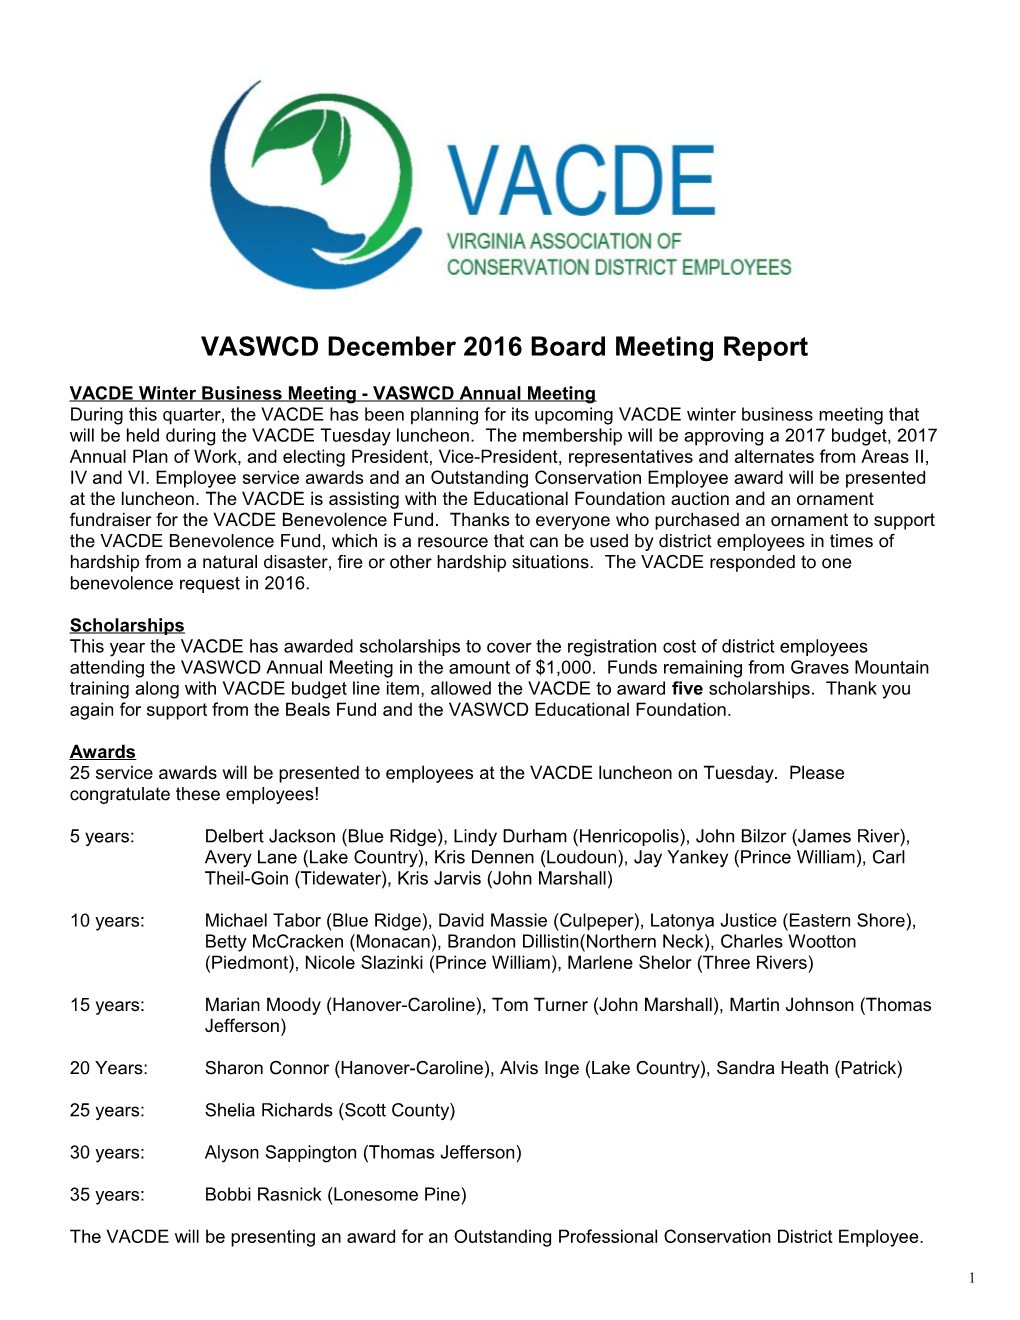 VACDE Winter Business Meeting - VASWCD Annual Meeting